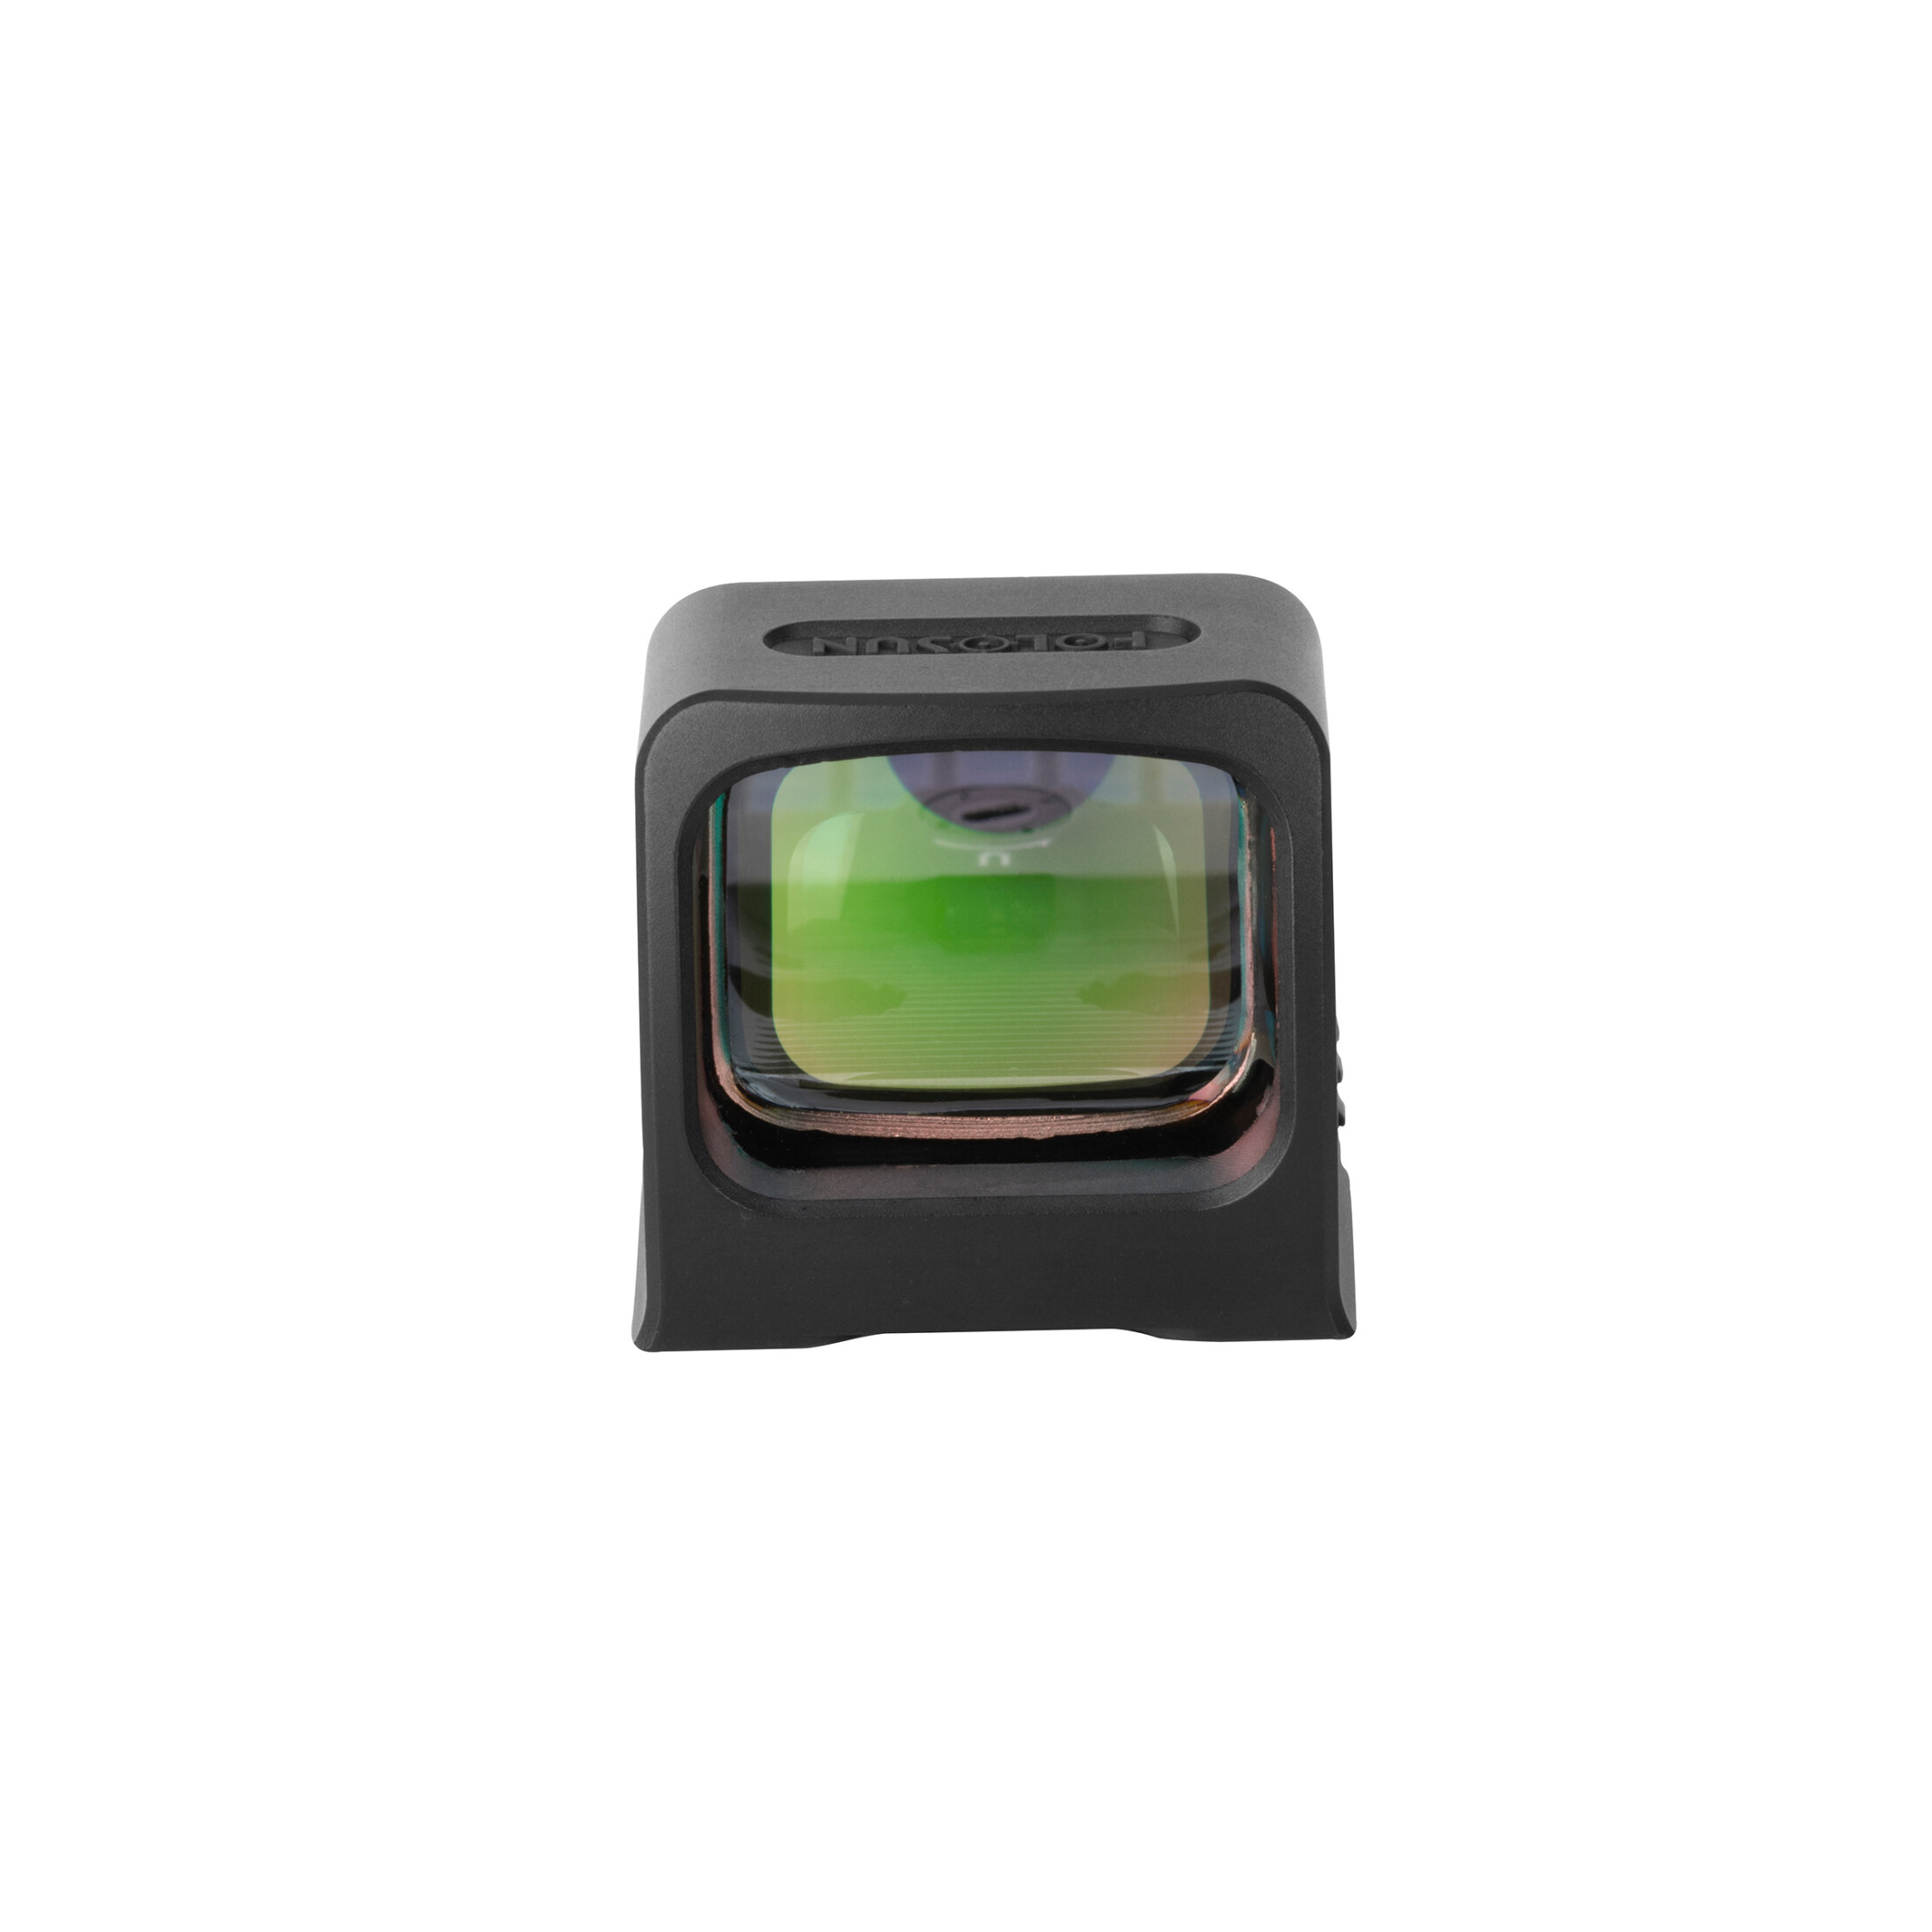 Holosun SCS-P10-GR open reflex green dot sight switchable 2MOA dot, 32MOA circle dot reticle solar …